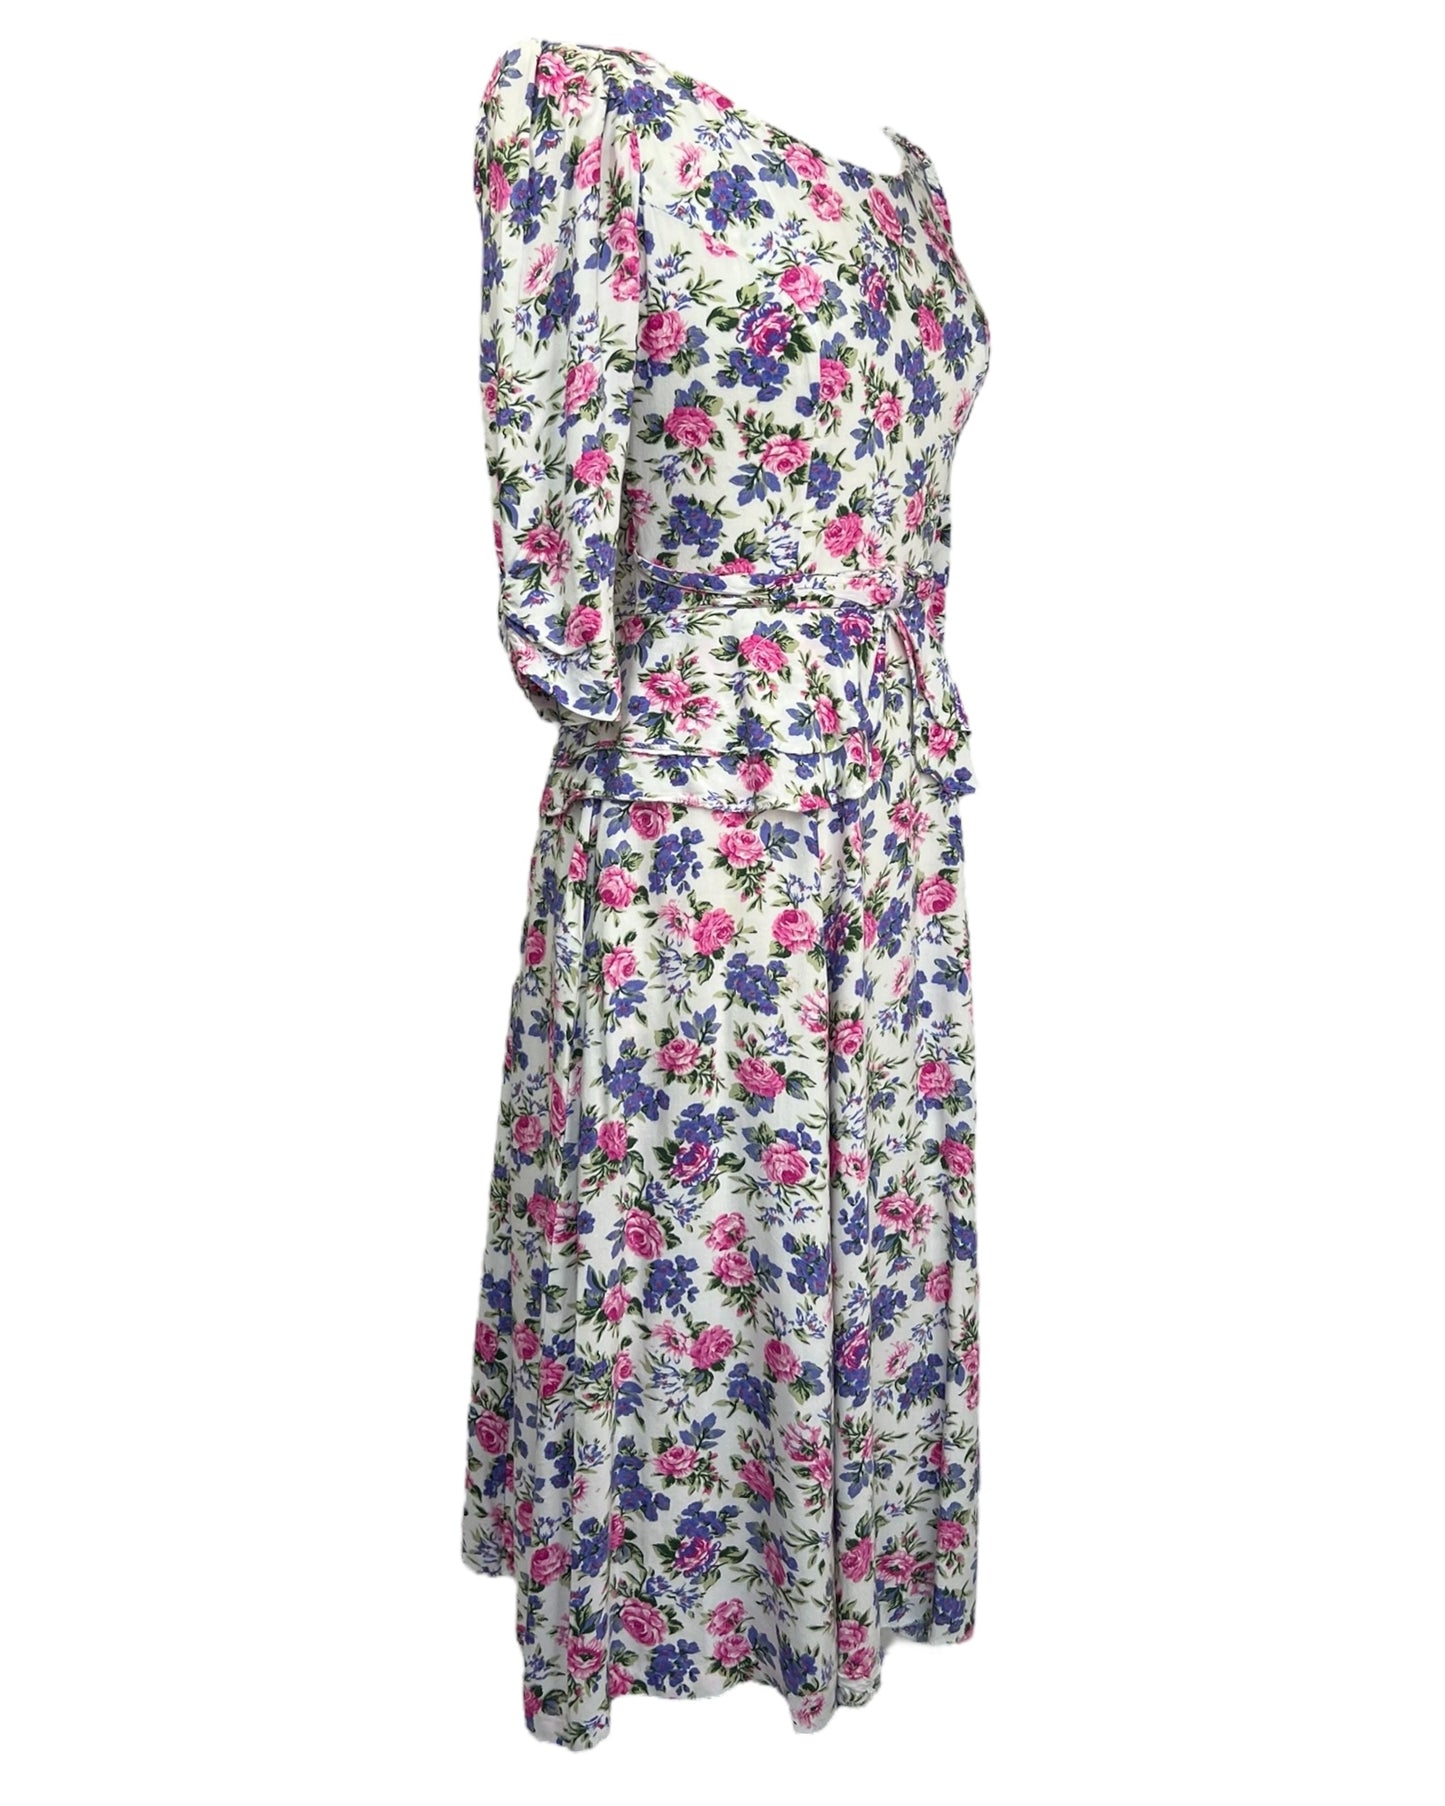 1980s Floral Fable Dress